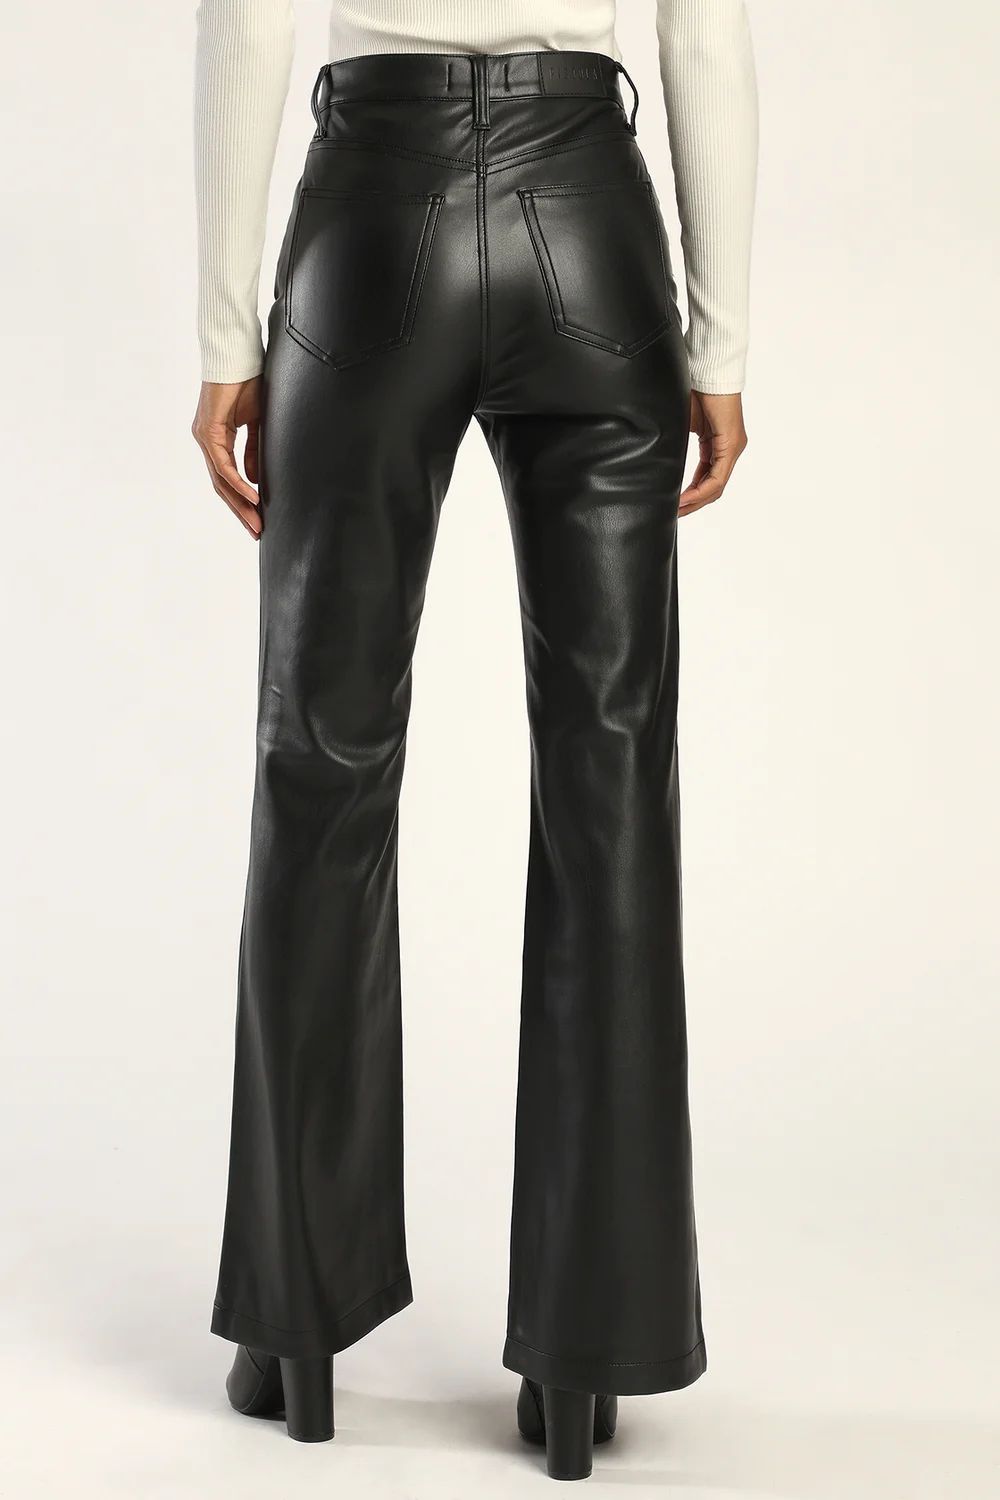 Stevie Black Vegan Leather High Rise Flare Pants | Lulus (US)